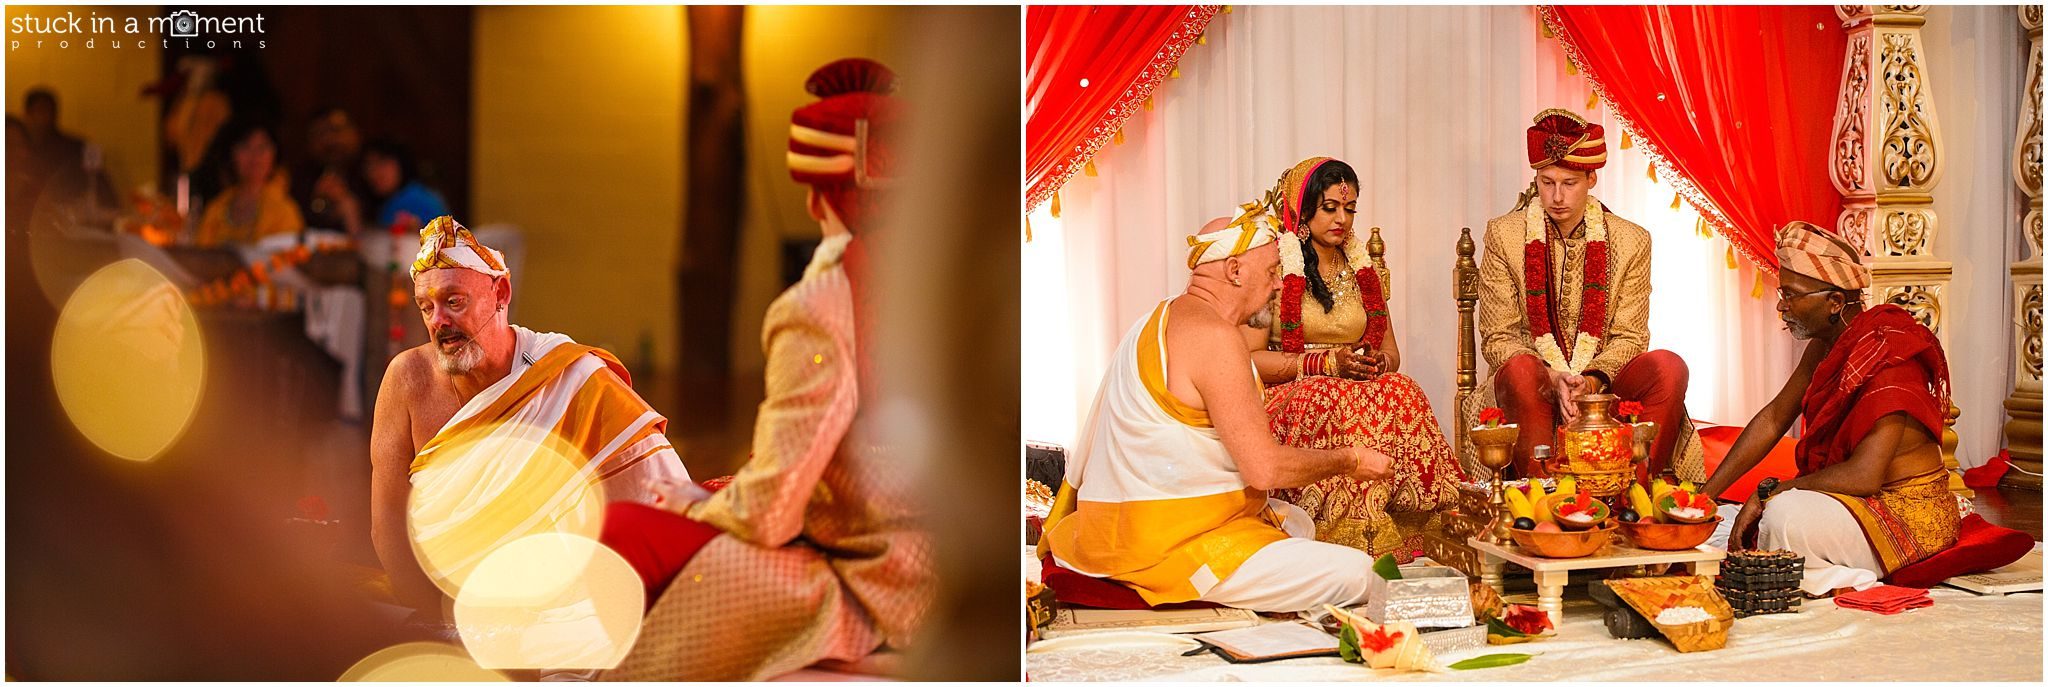 indian wedding photographer ottimo house